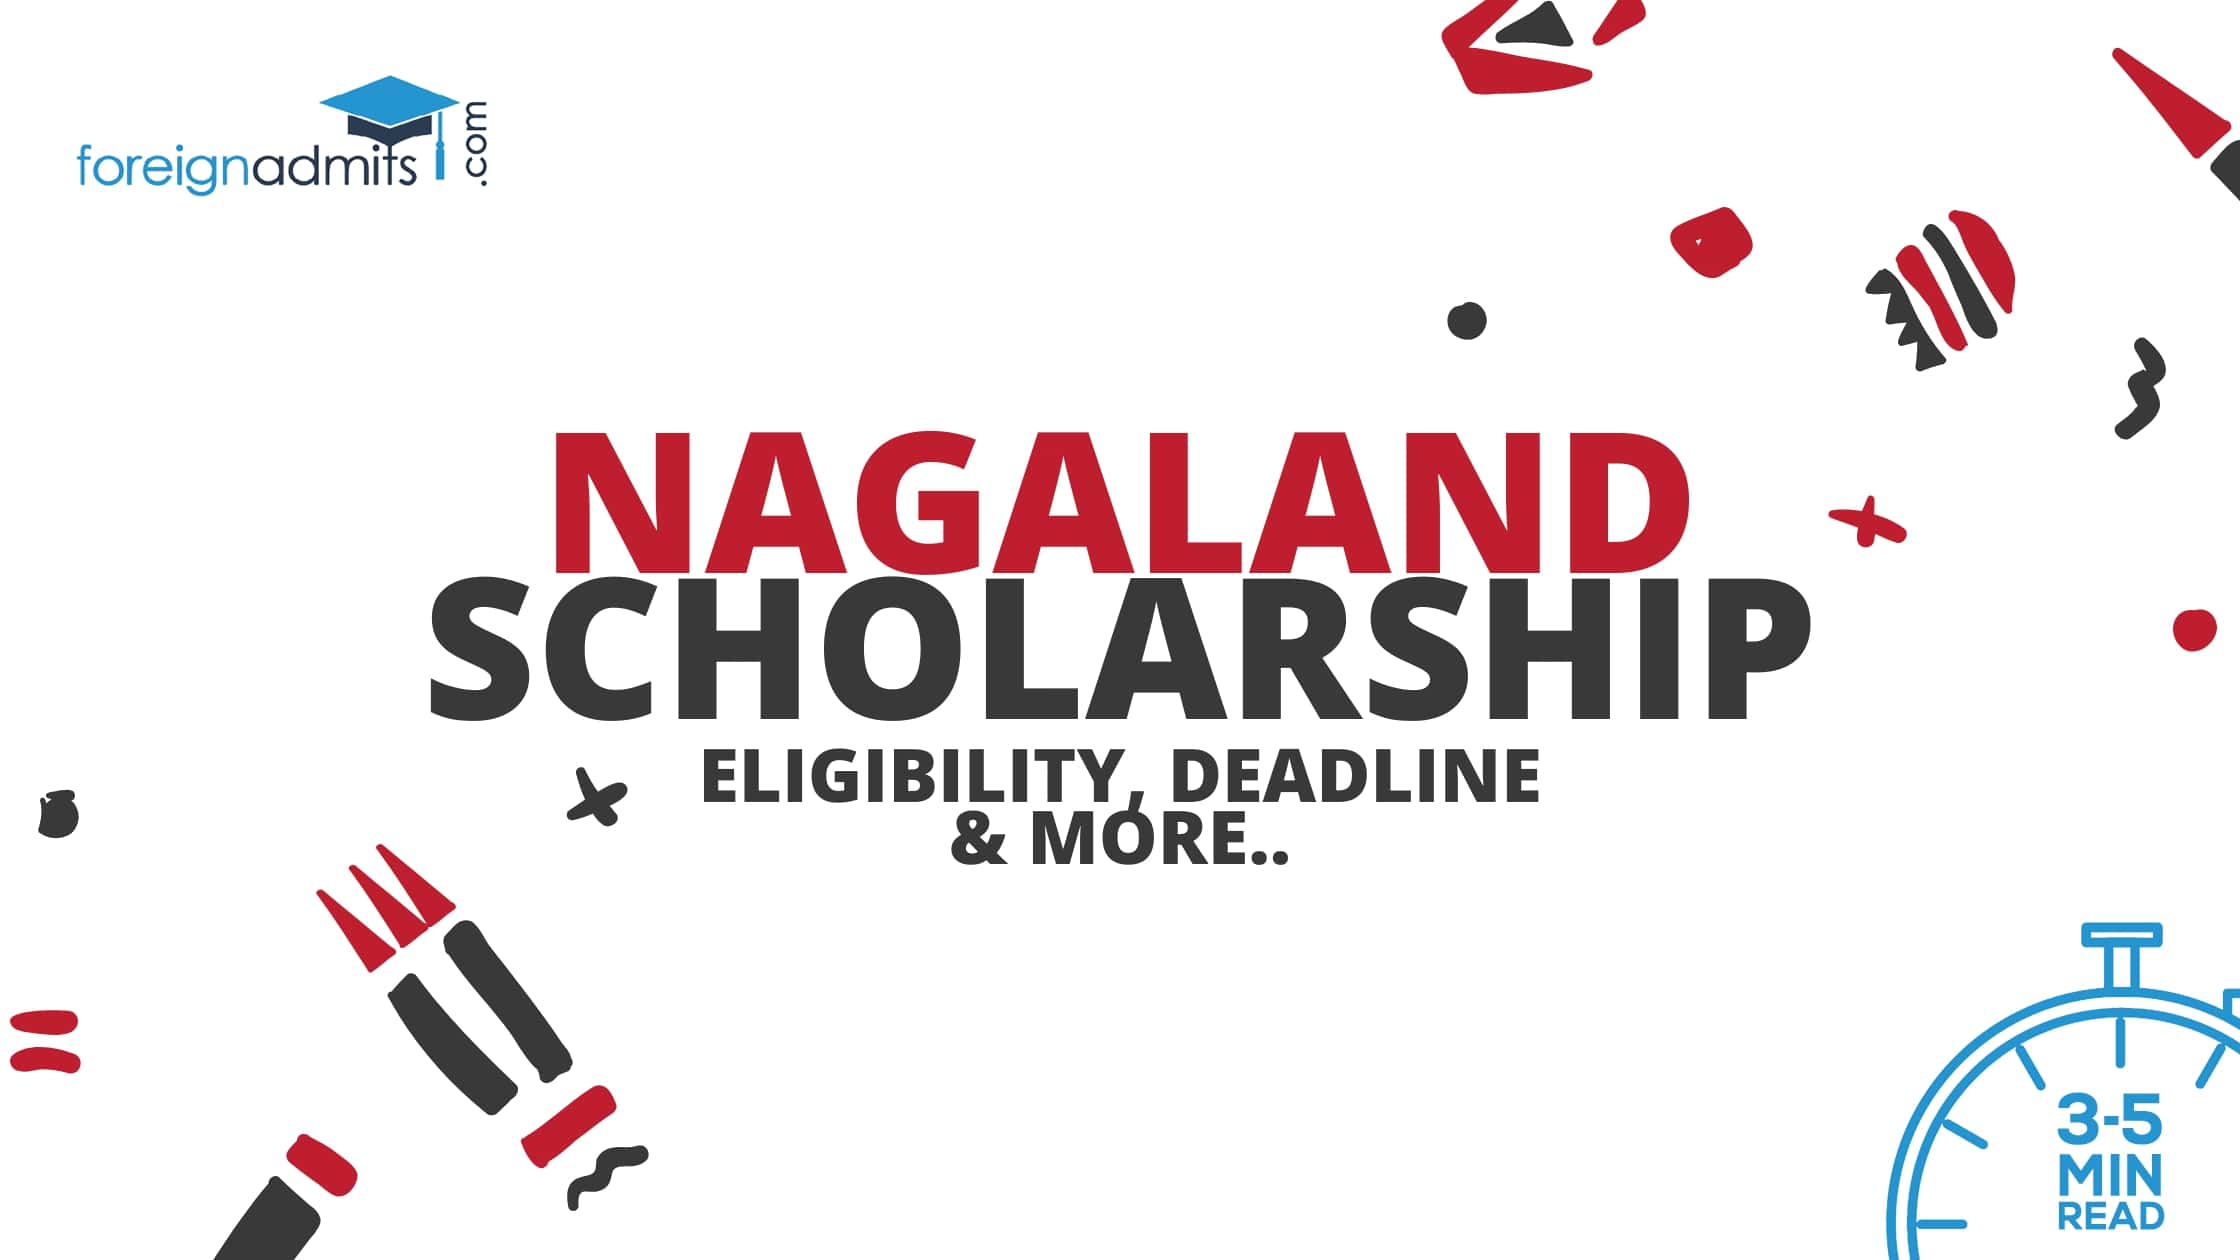 Nagaland Scholarship – Eligibility, Deadline, & More